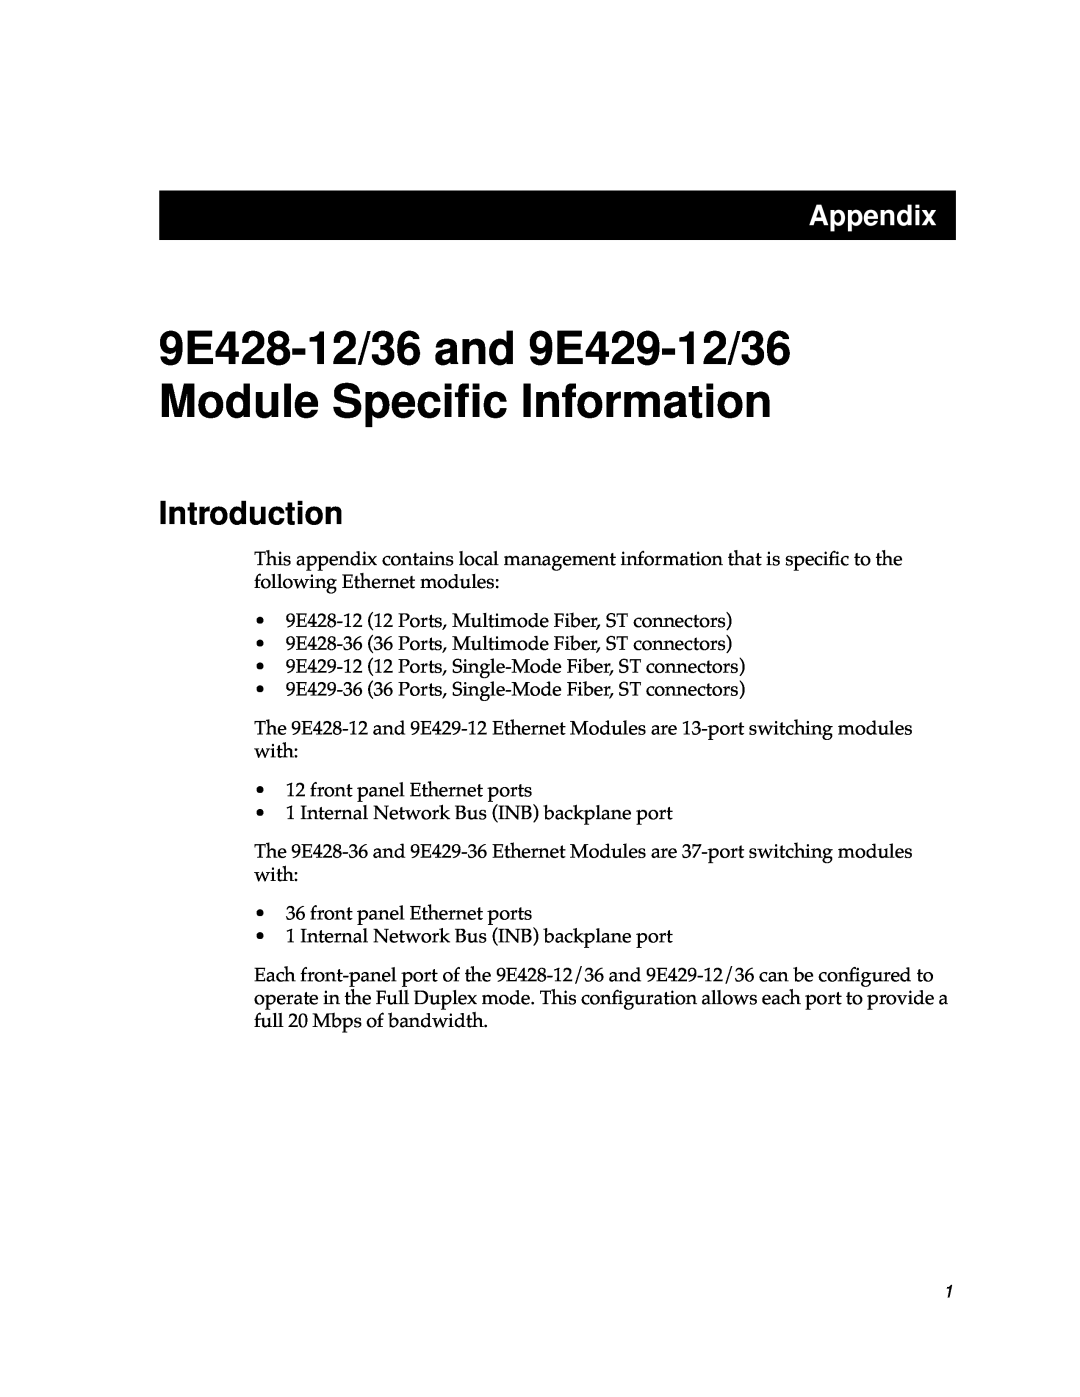 Cabletron Systems 9E429-36, 9E428-36 Introduction, 9E428-12/36 and 9E429-12/36 Module Speciﬁc Information, Appendix 